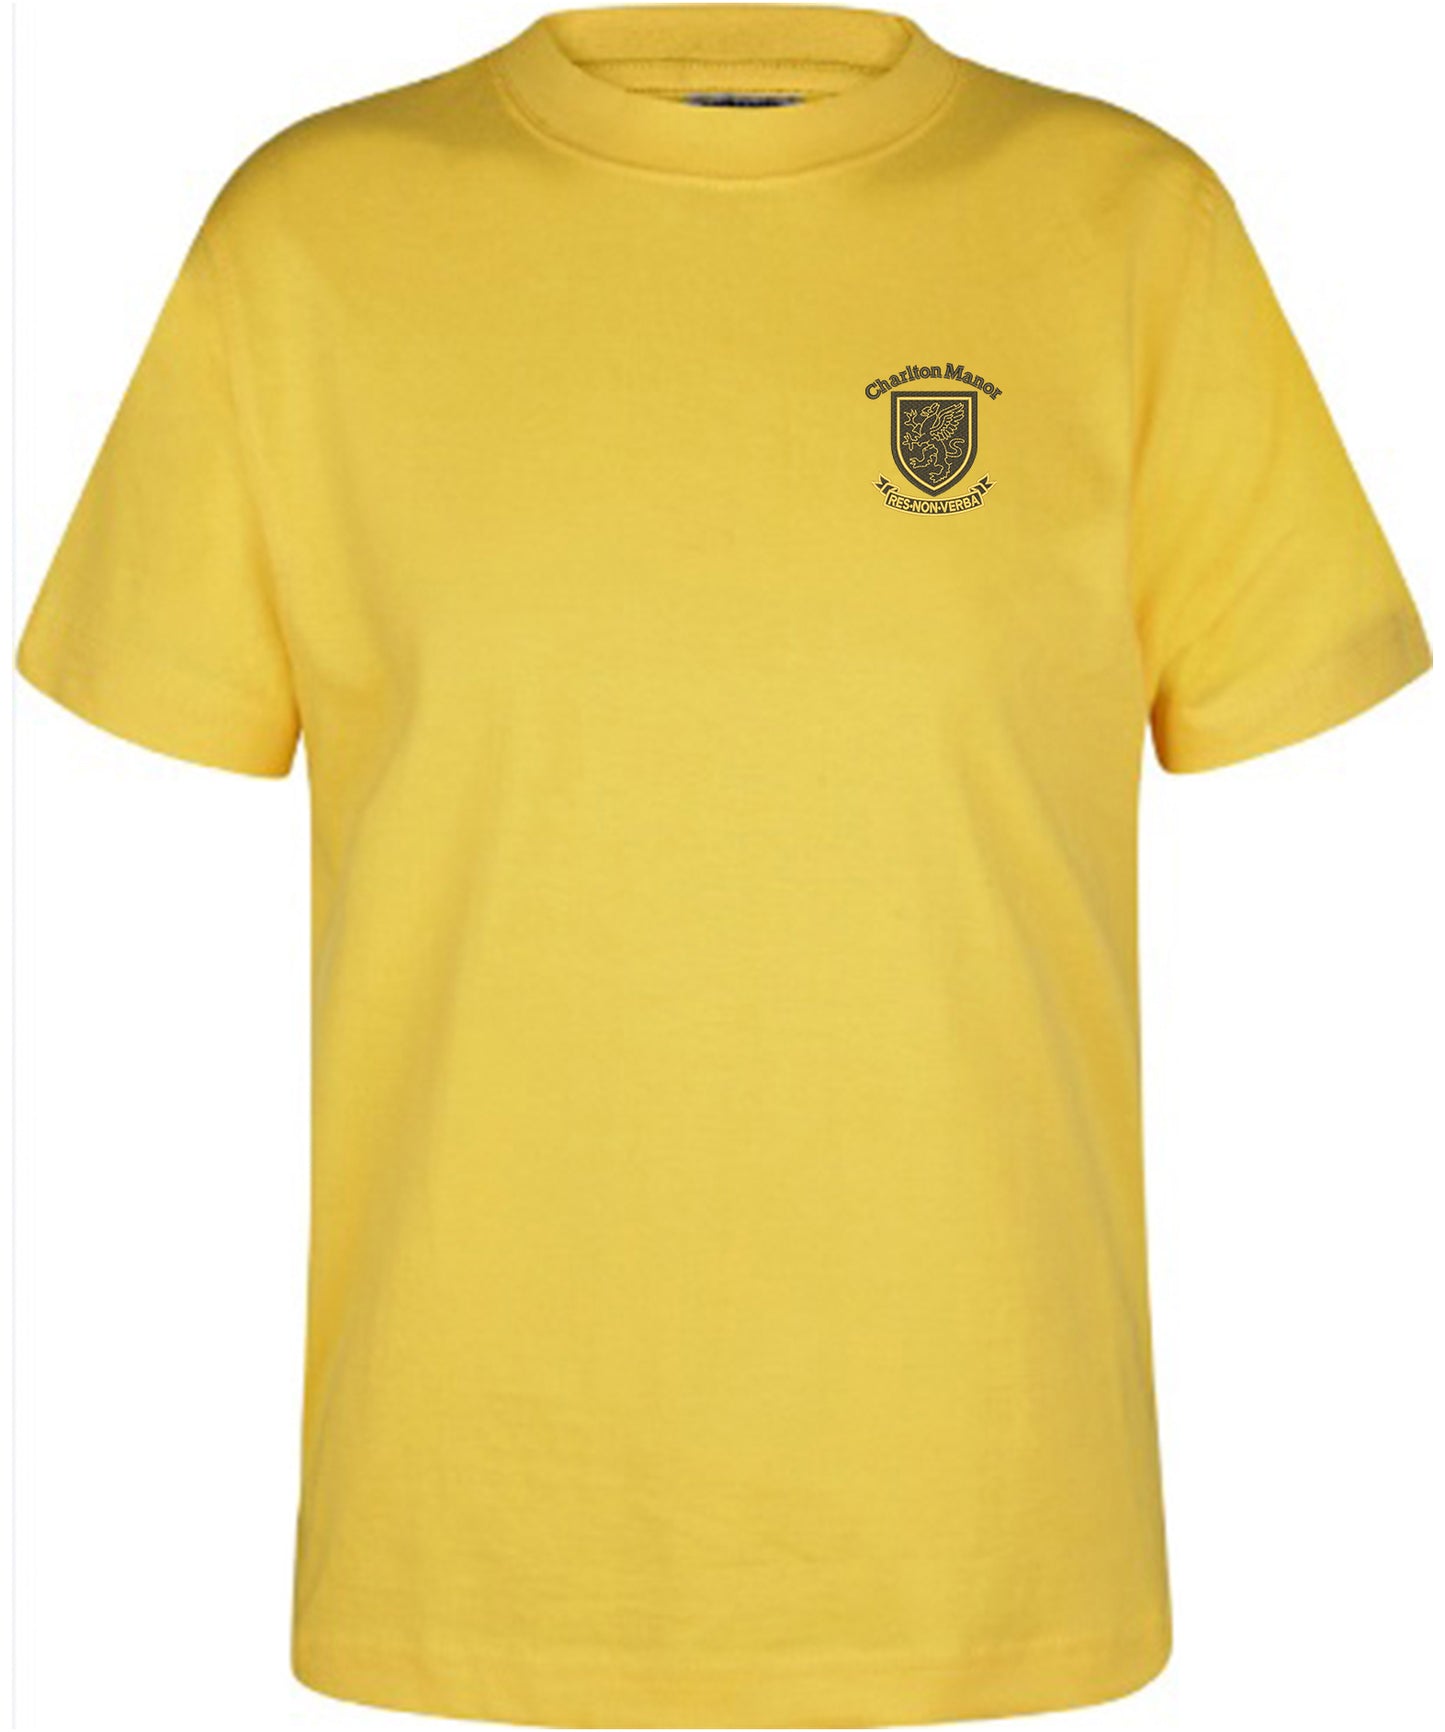 Charlton Manor Primary School - Unisex Cotton T-Shirt - Gold